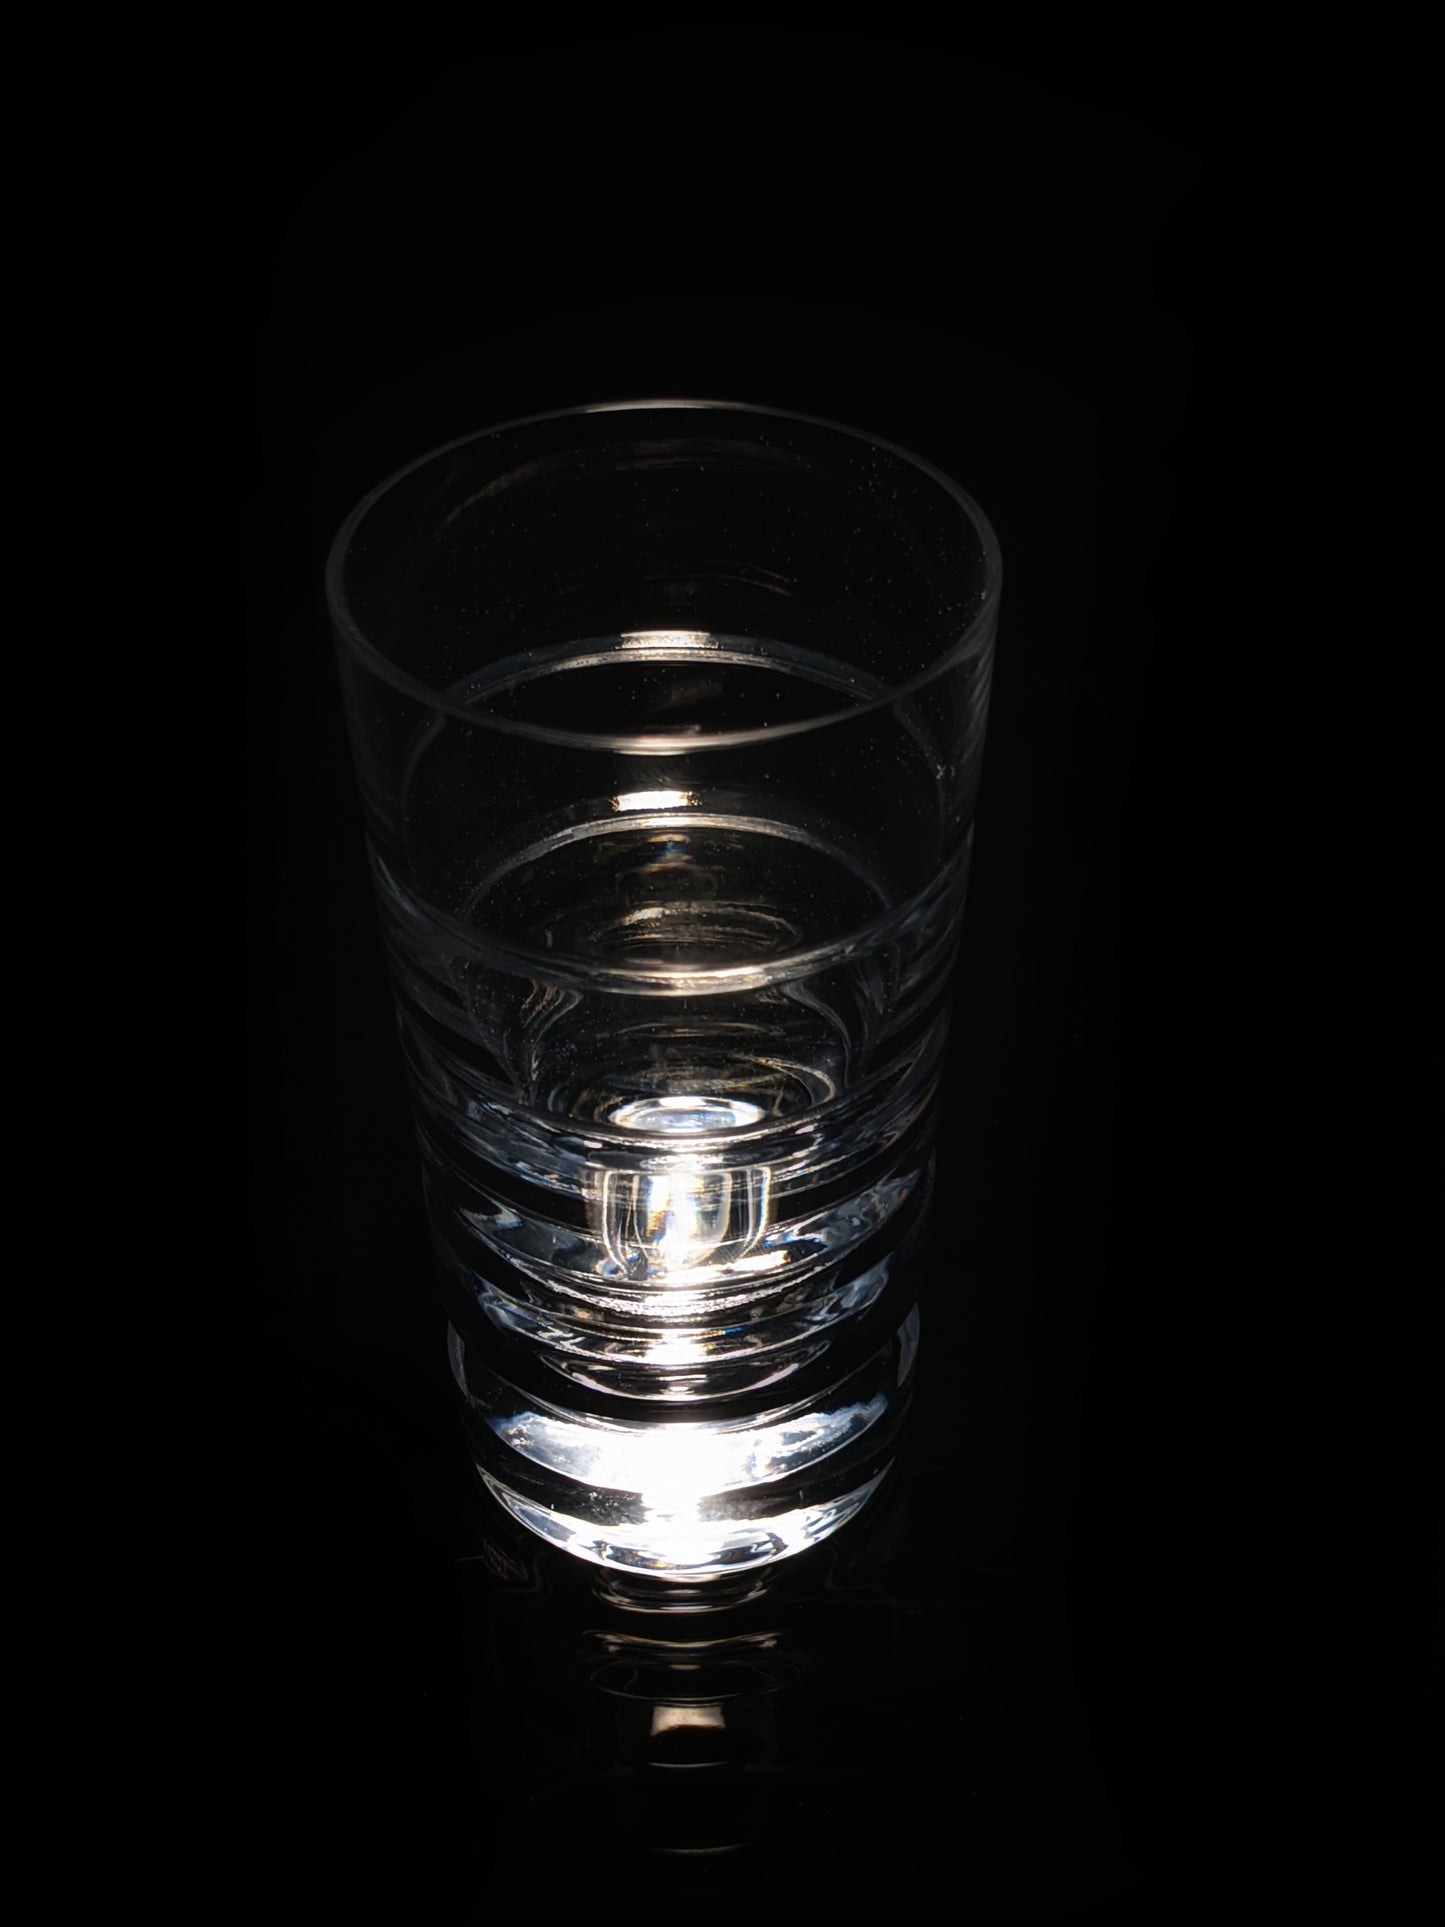 Faberge Clear Crystal Shot Glasses Set of 4